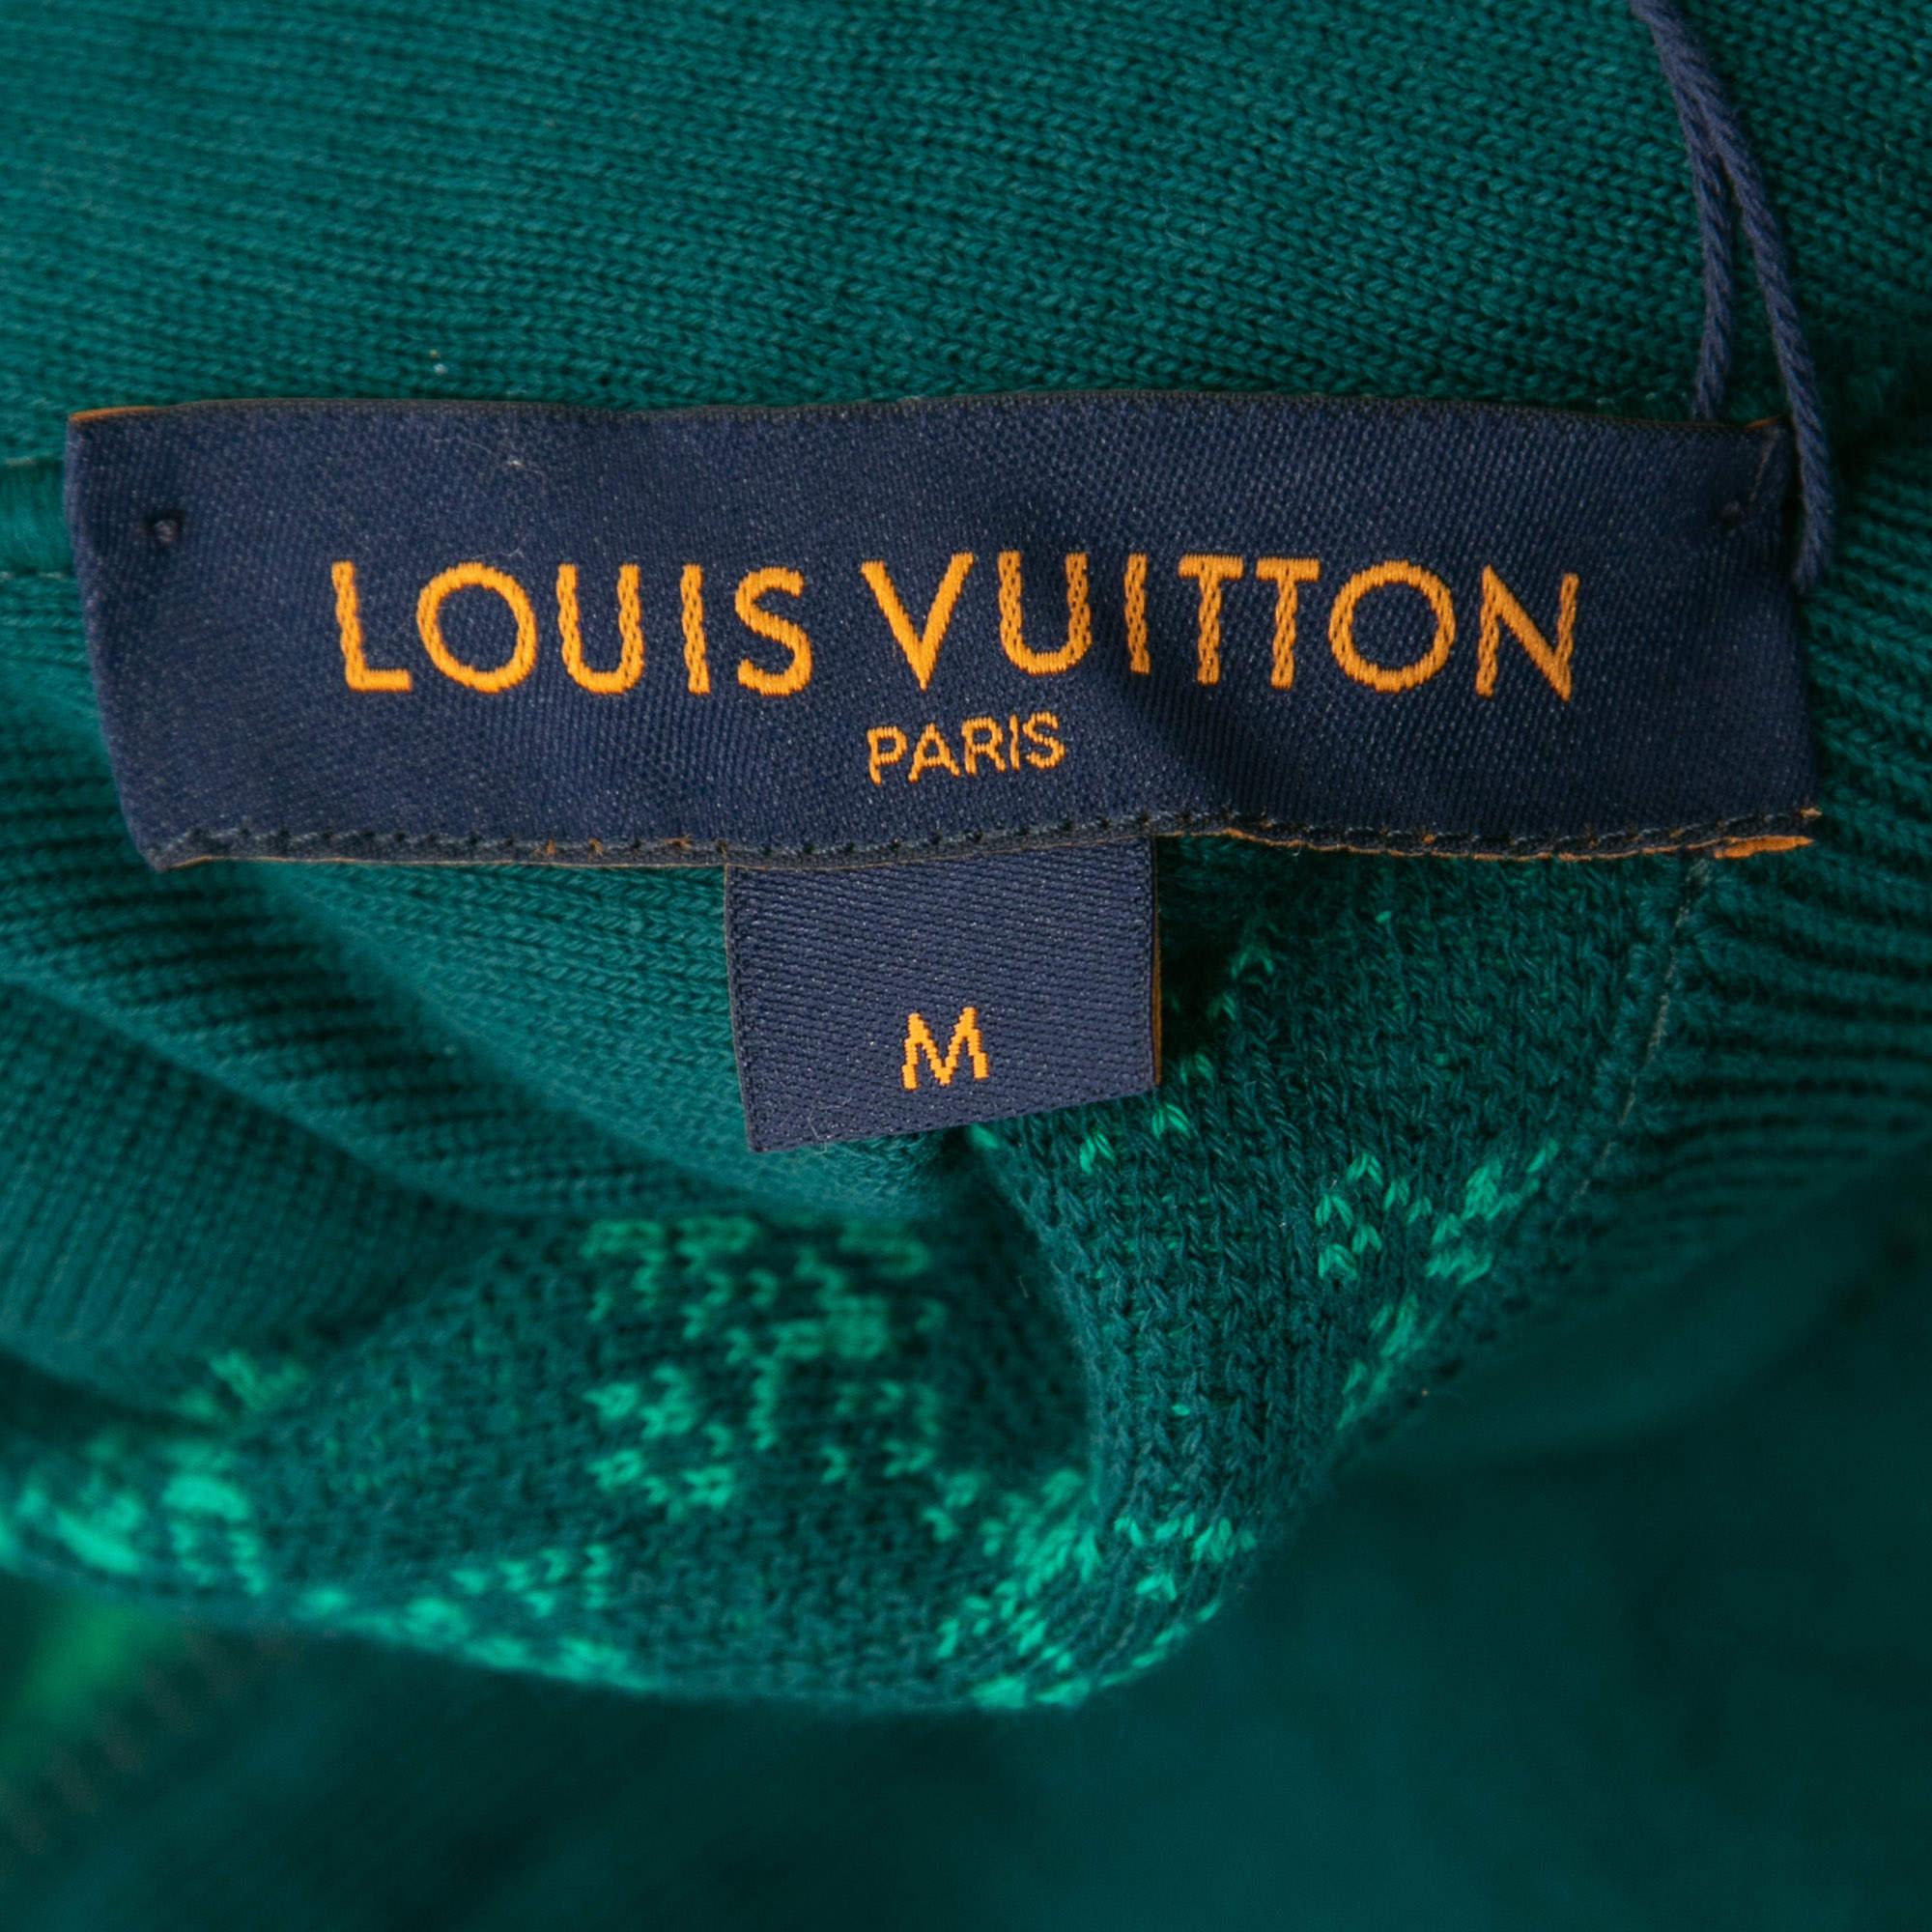 Louis Vuitton Mallard Blue Damier Pattern Cotton Knit Reversible Track Top M 2